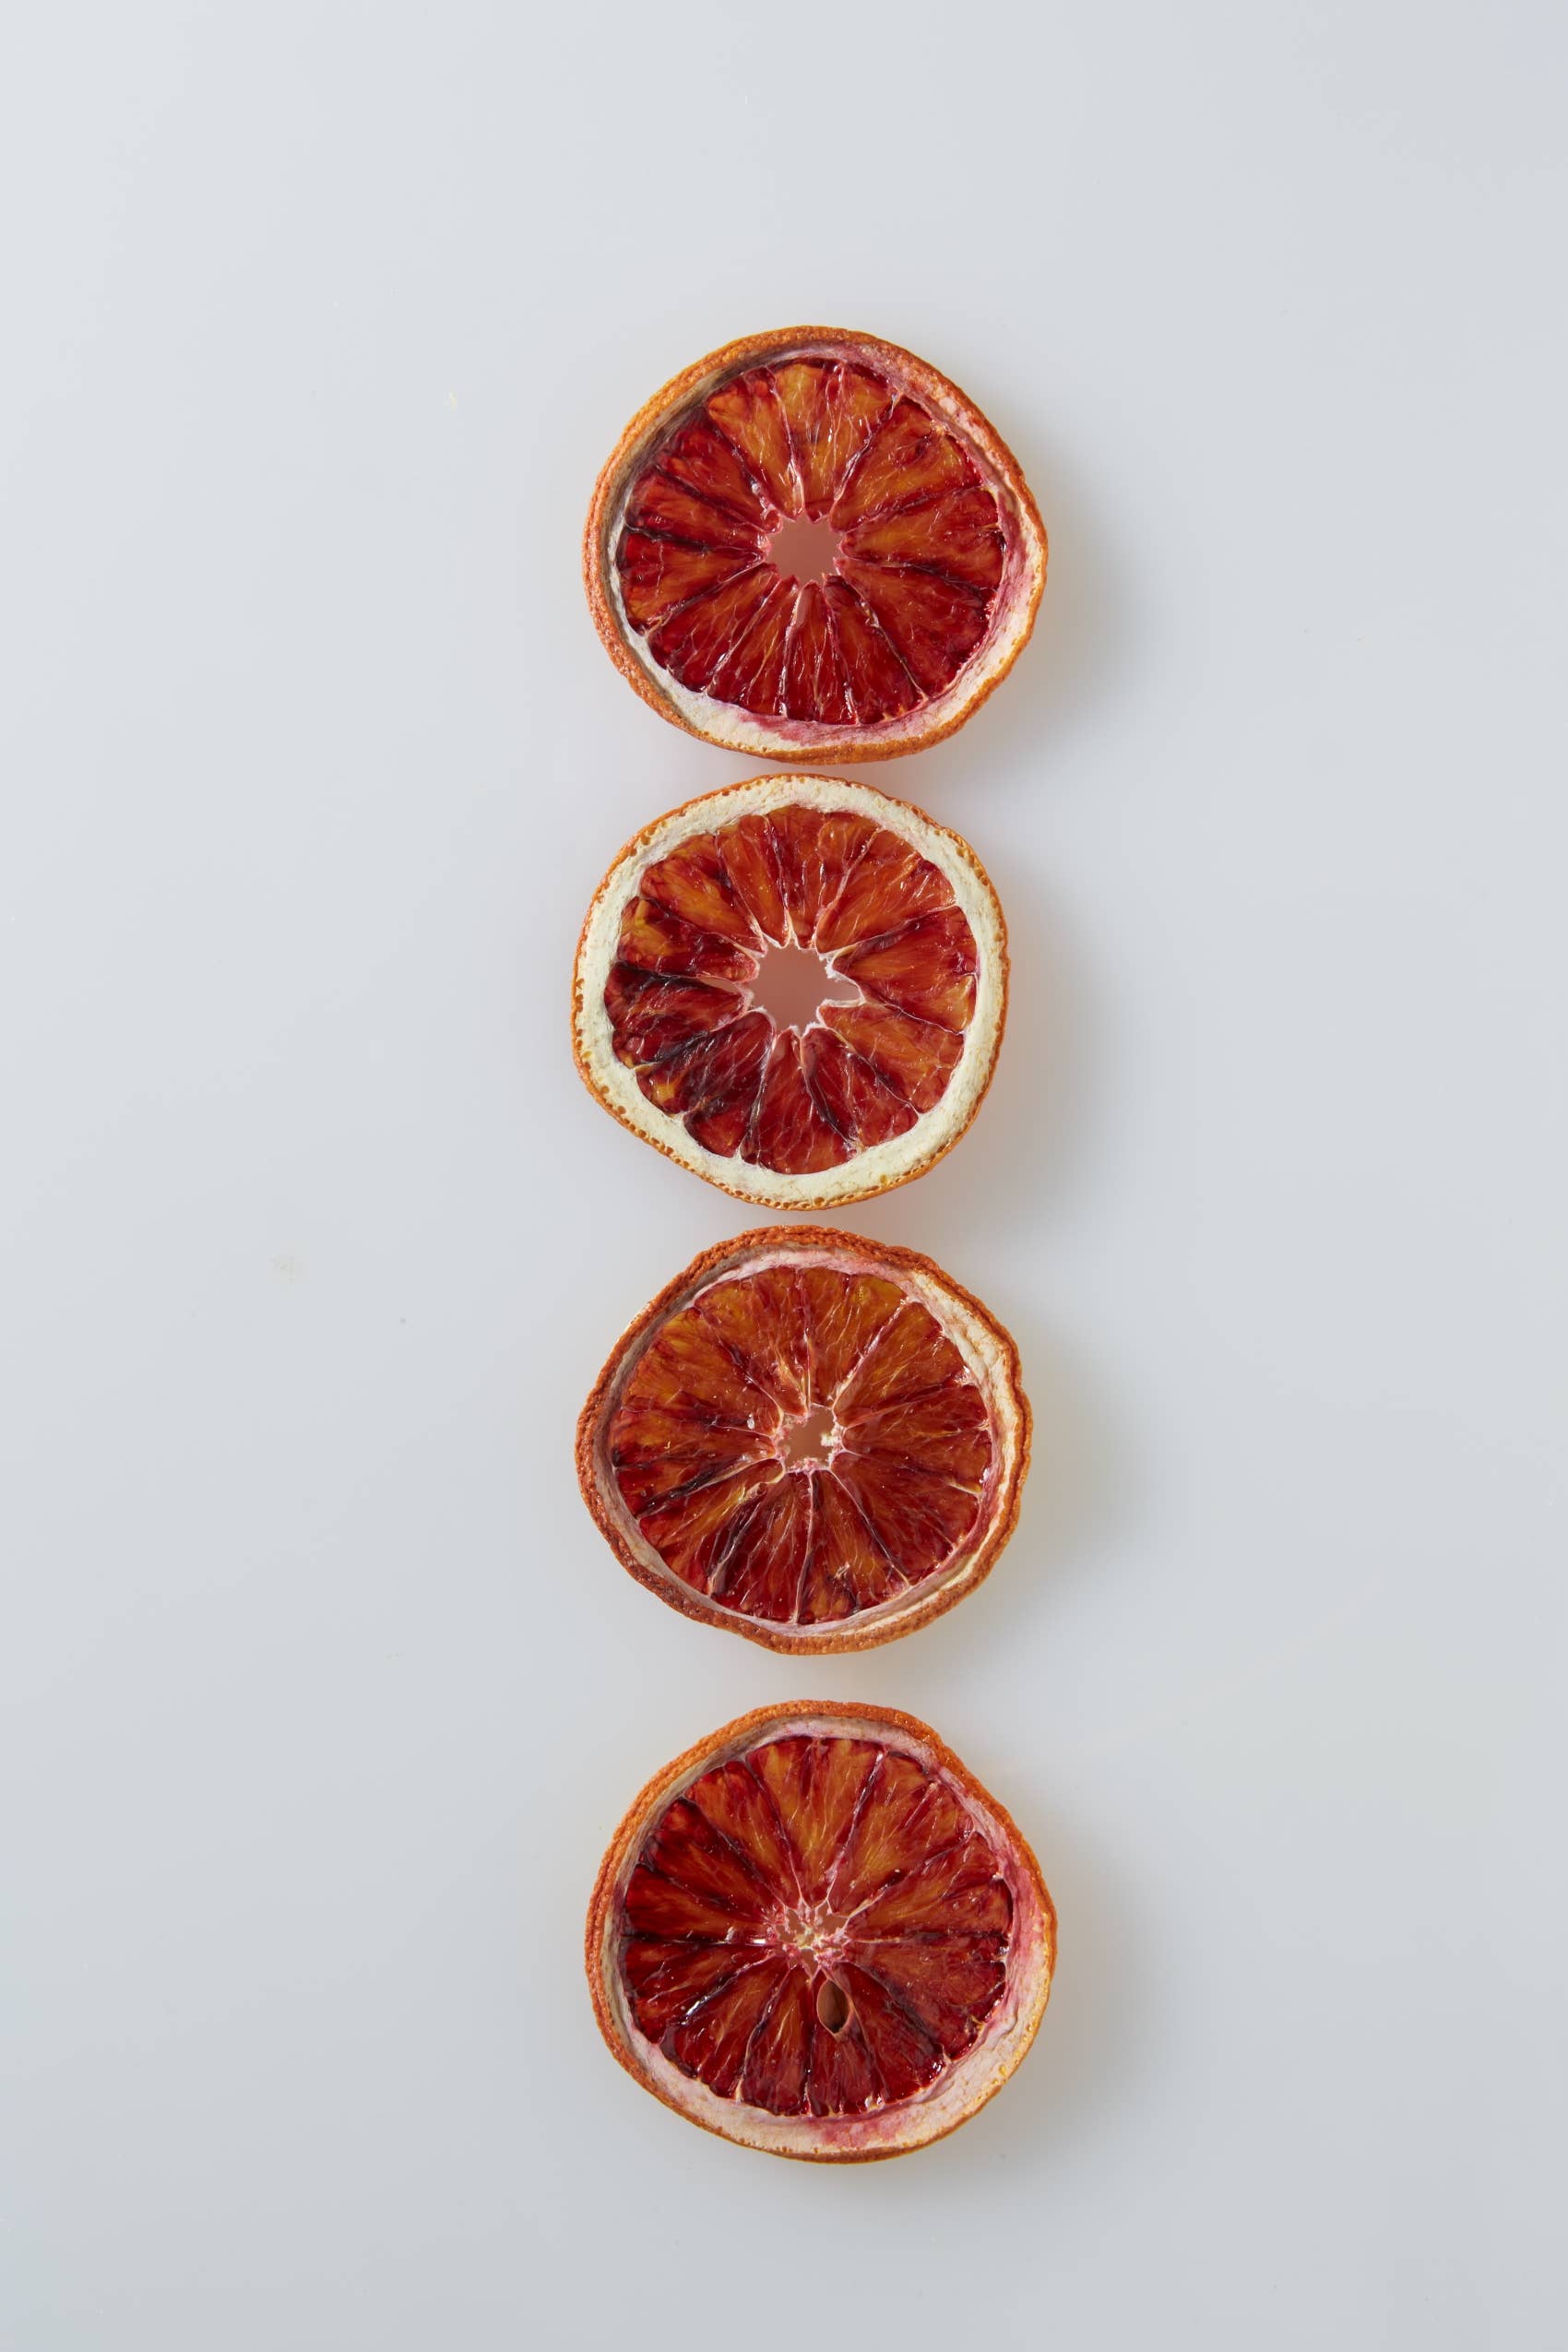 Crispy Blood Orange Slices | 1.5 oz